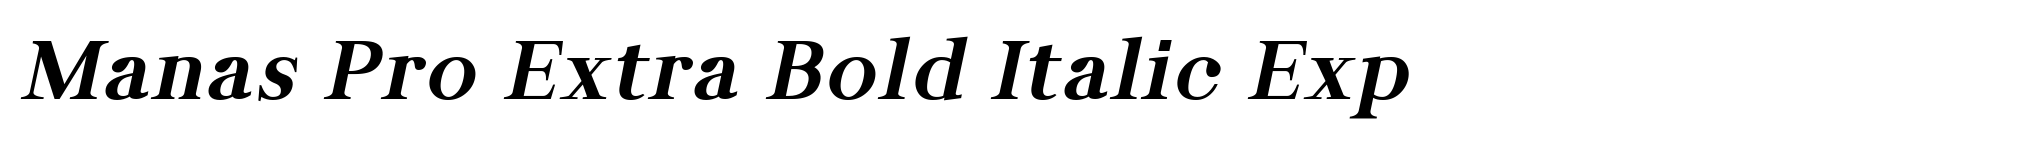 Manas Pro Extra Bold Italic Exp image